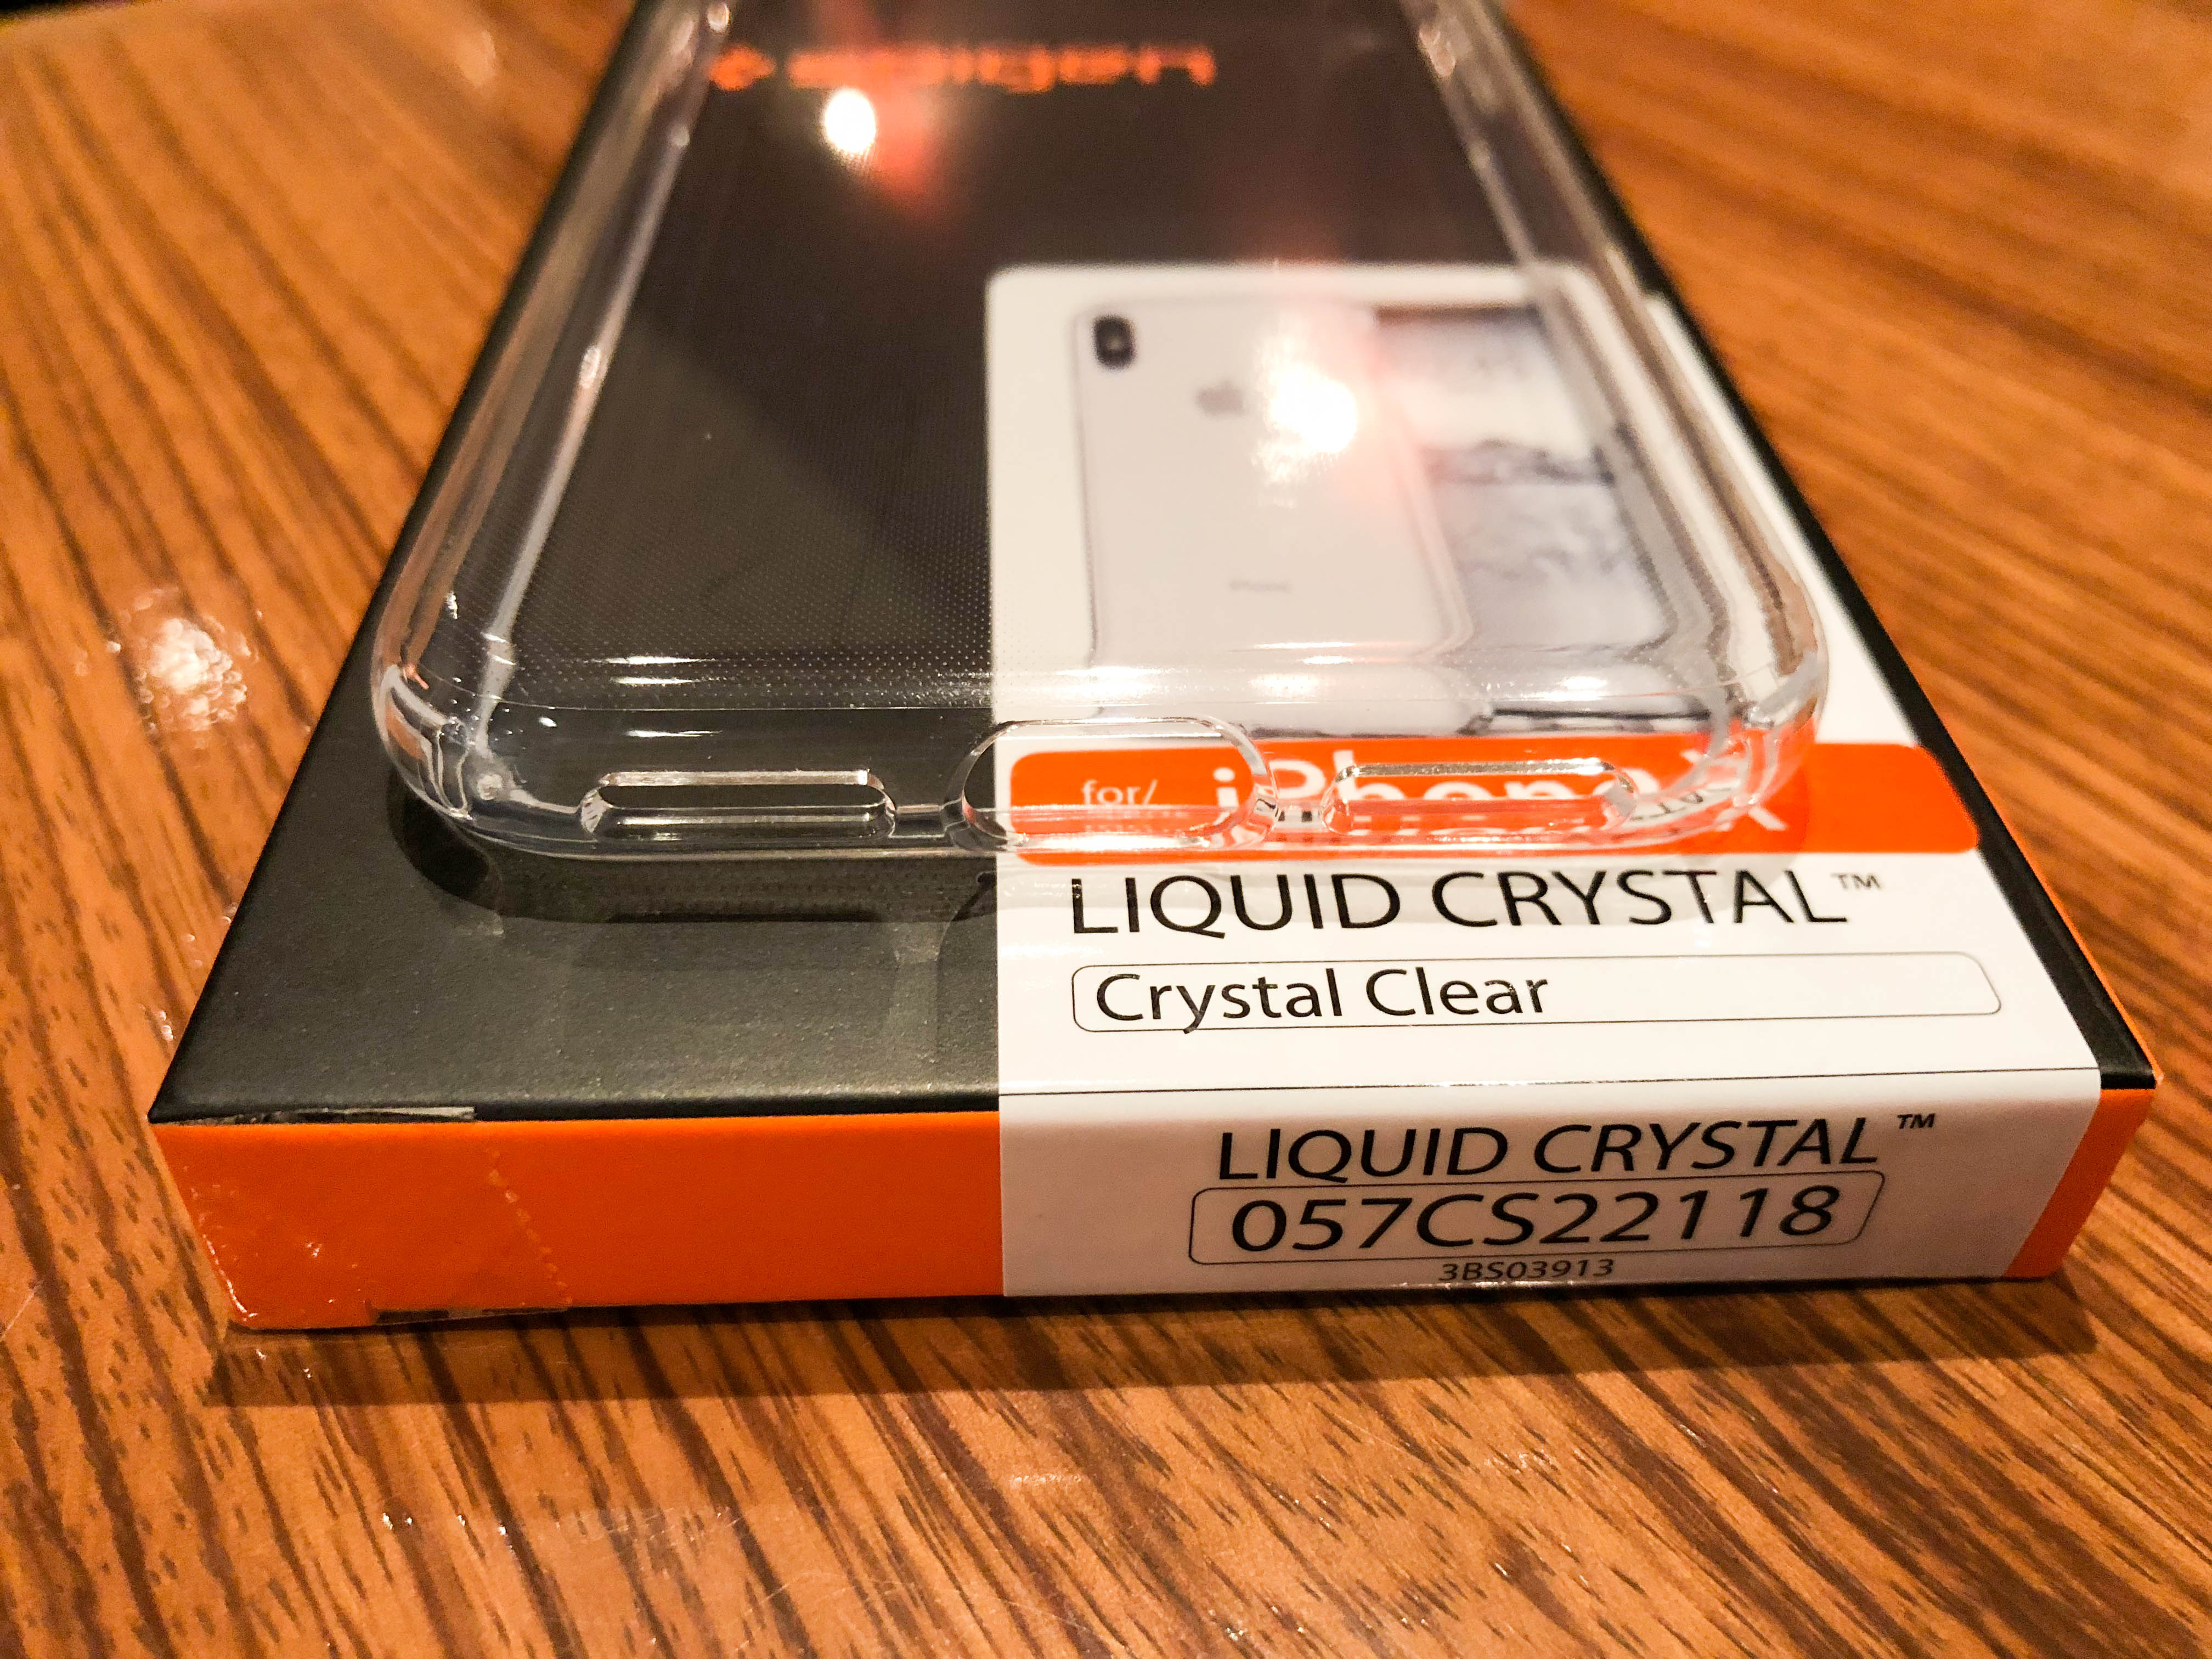 Spigen iPhone X ケース Liquid Crystalパッケージ